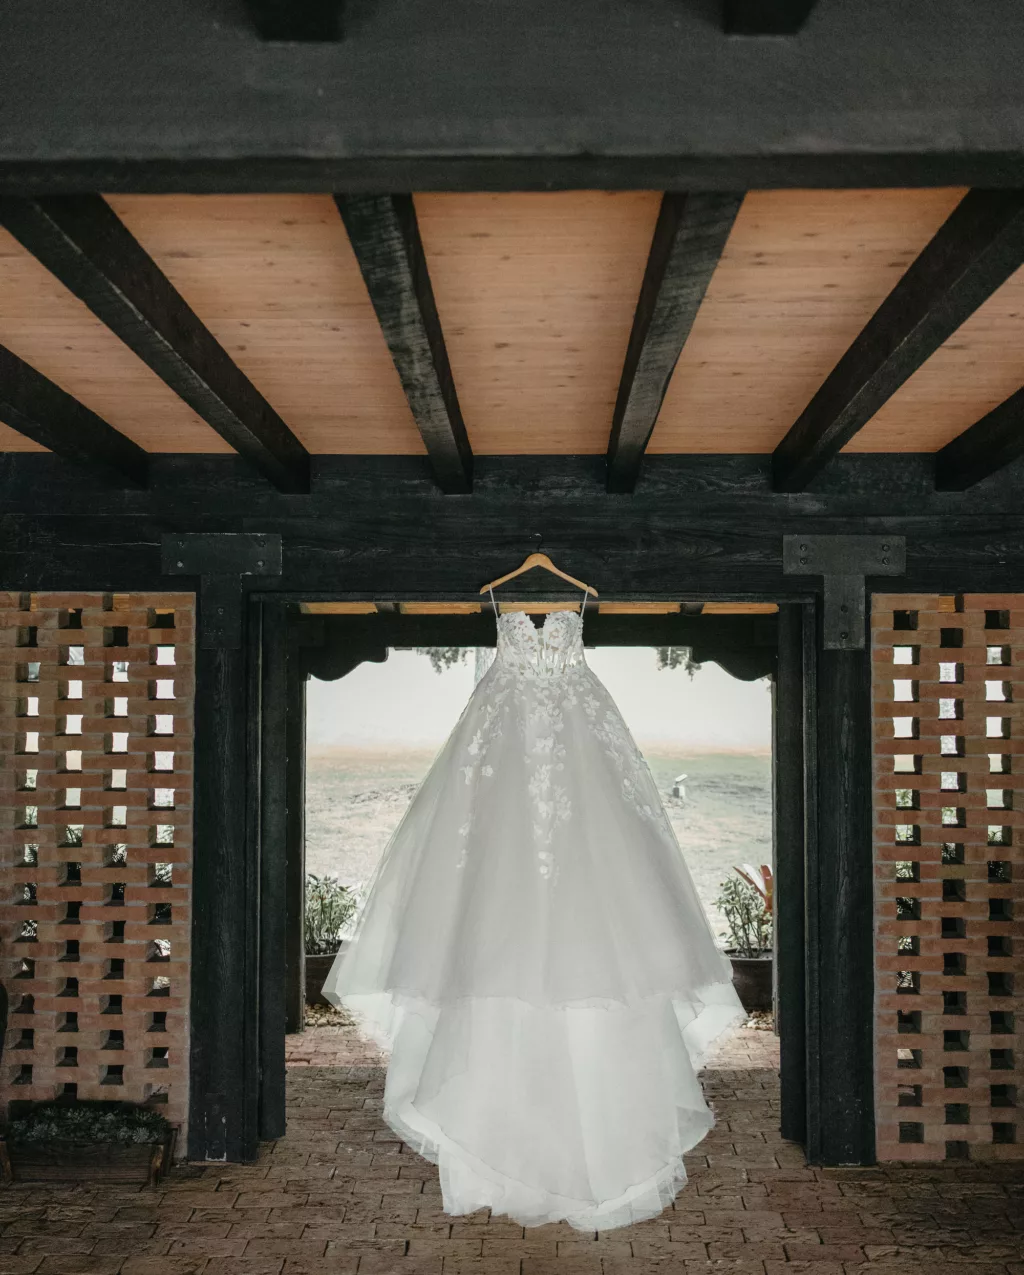 Elegant White Strapless Sheer Boned Bodice Ballgown Wedding Dress with Floral Applique Inspiration